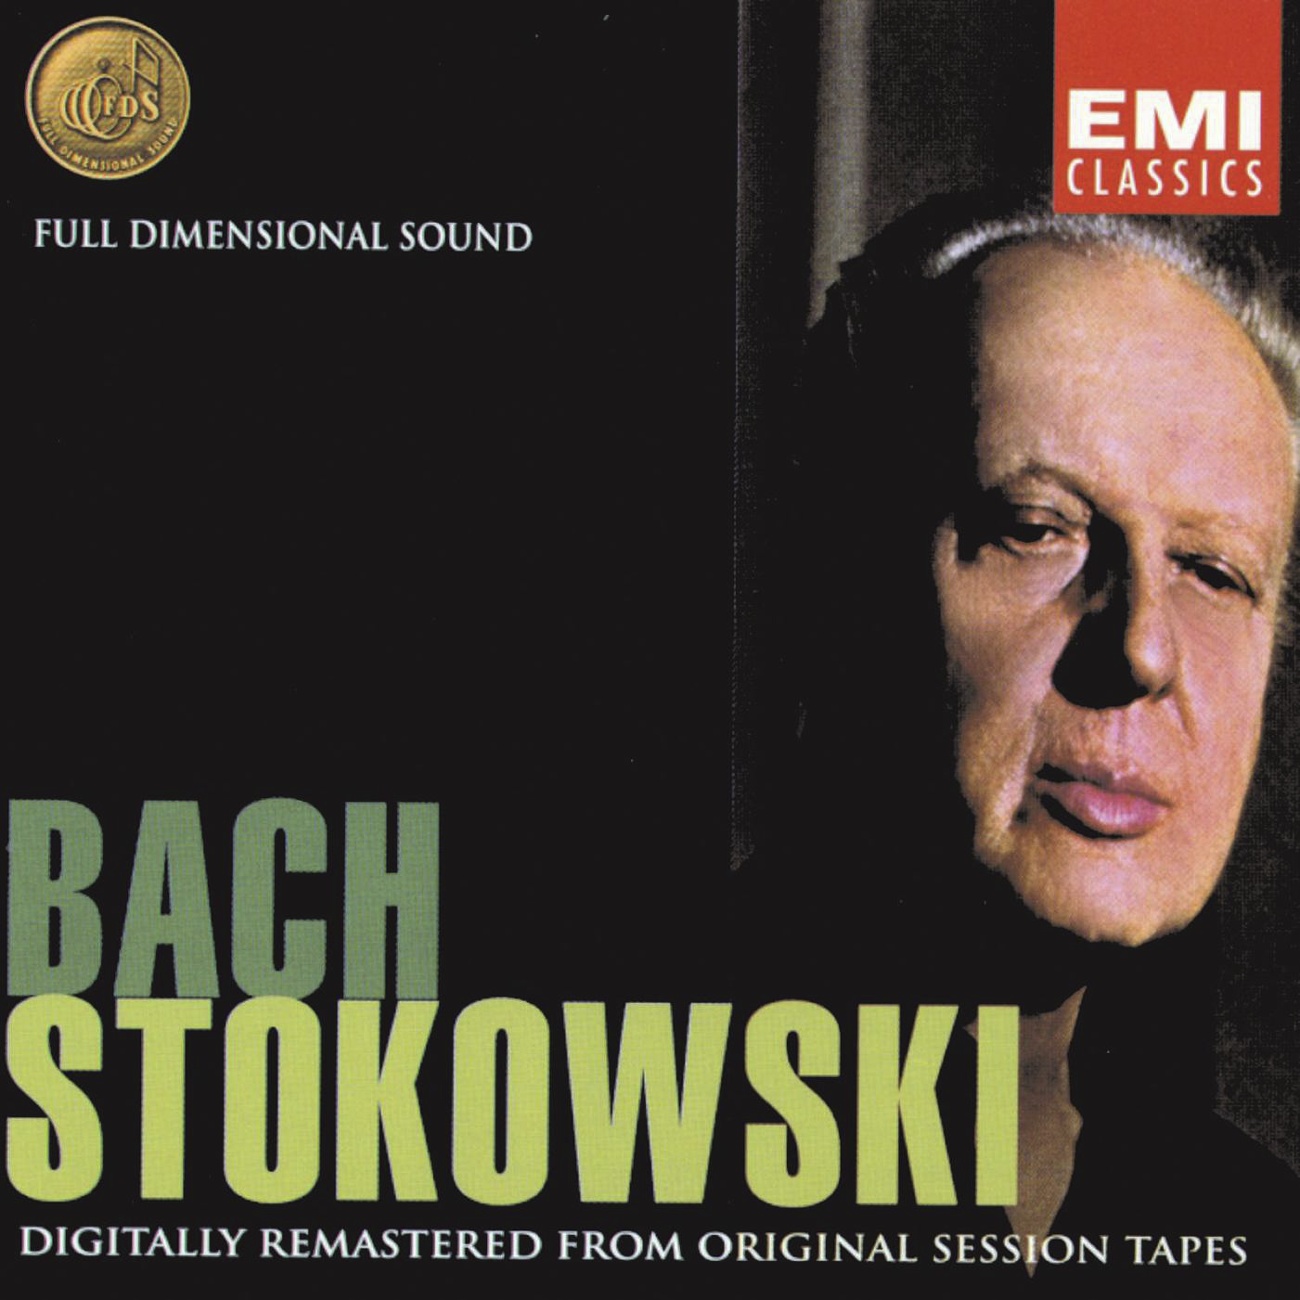 Toccata and Fugue in D minor BWV565 (arr. Stokowski) (1997 Digital Remaster): Fugue